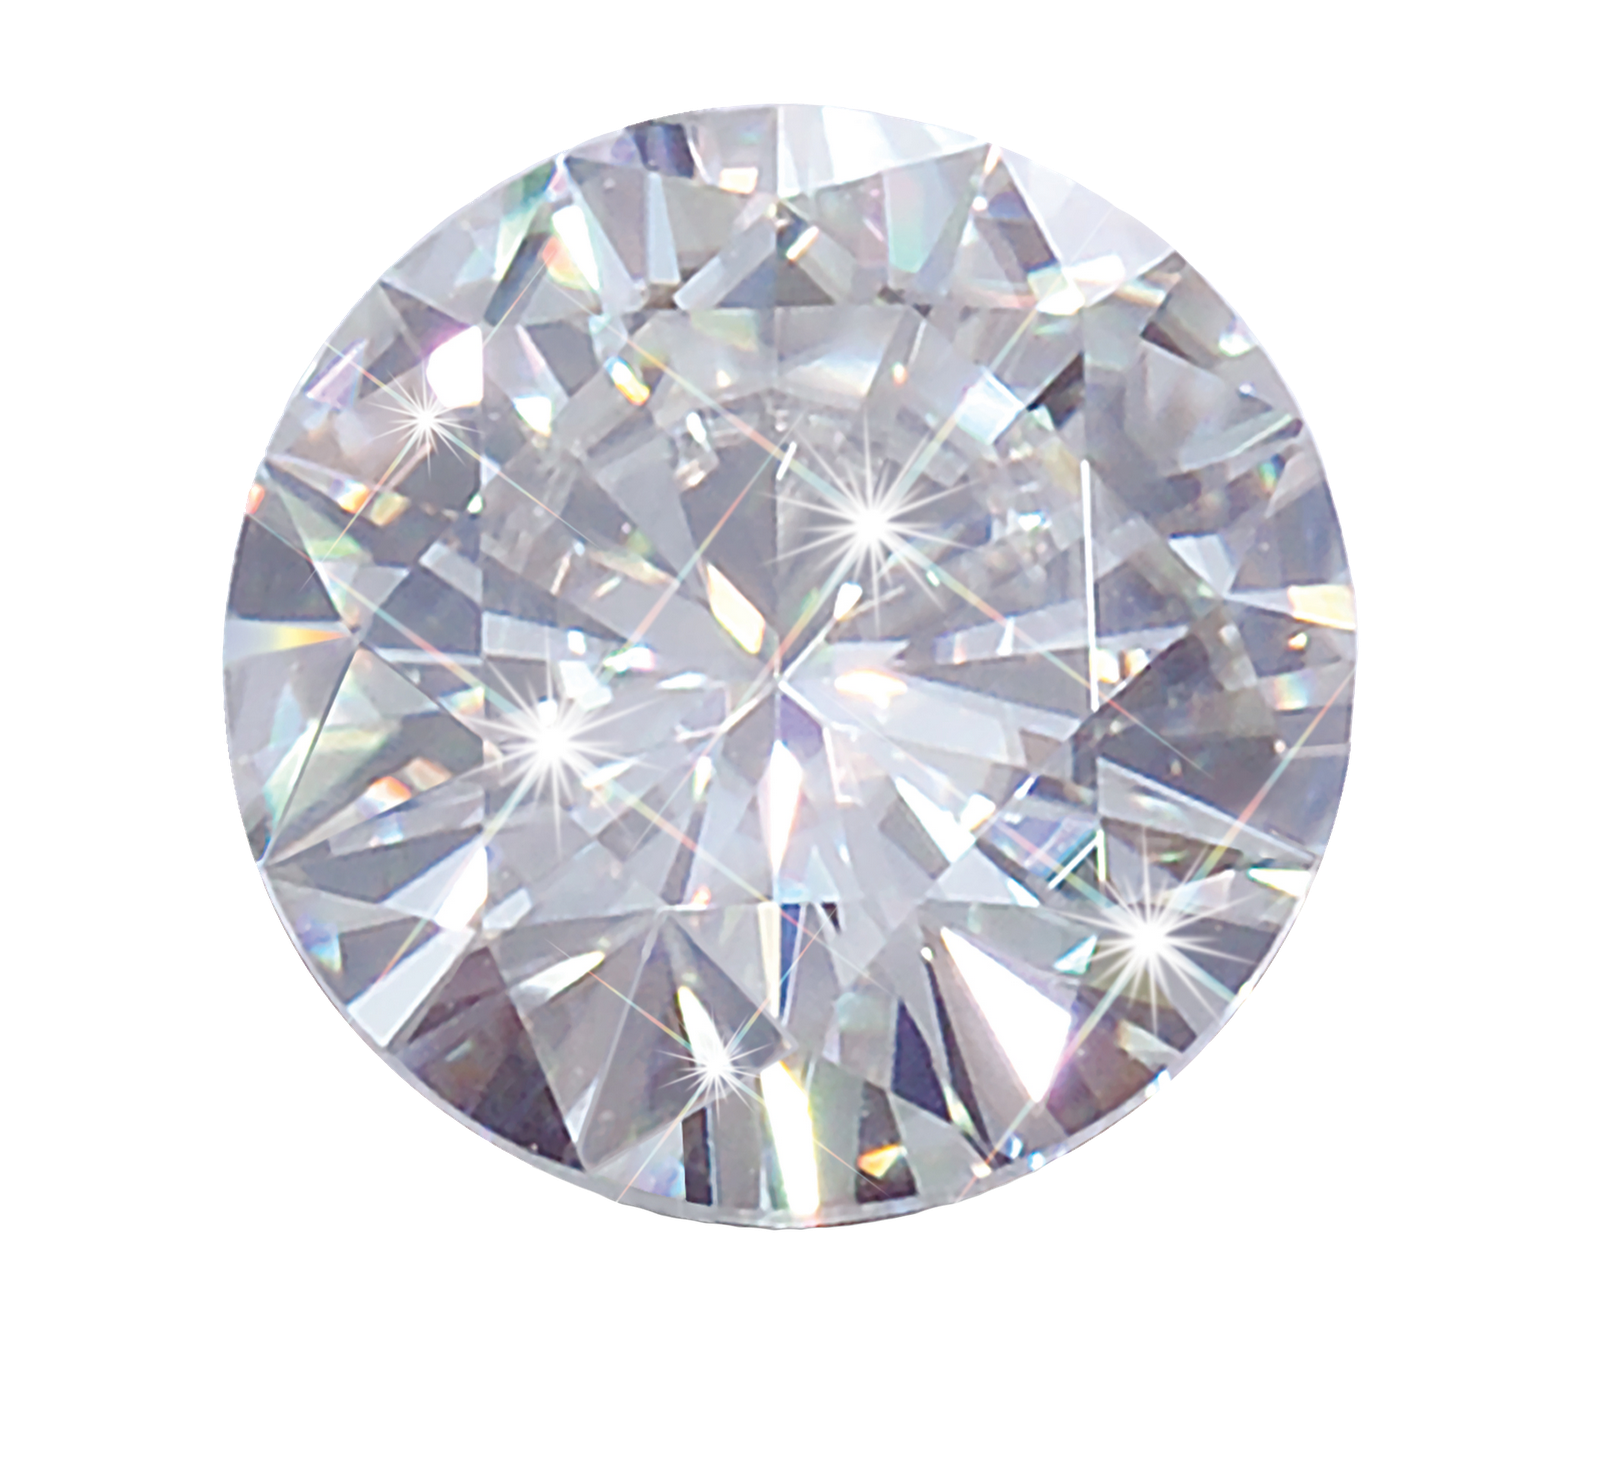 Diamond Png Image - Diamond, Transparent background PNG HD thumbnail